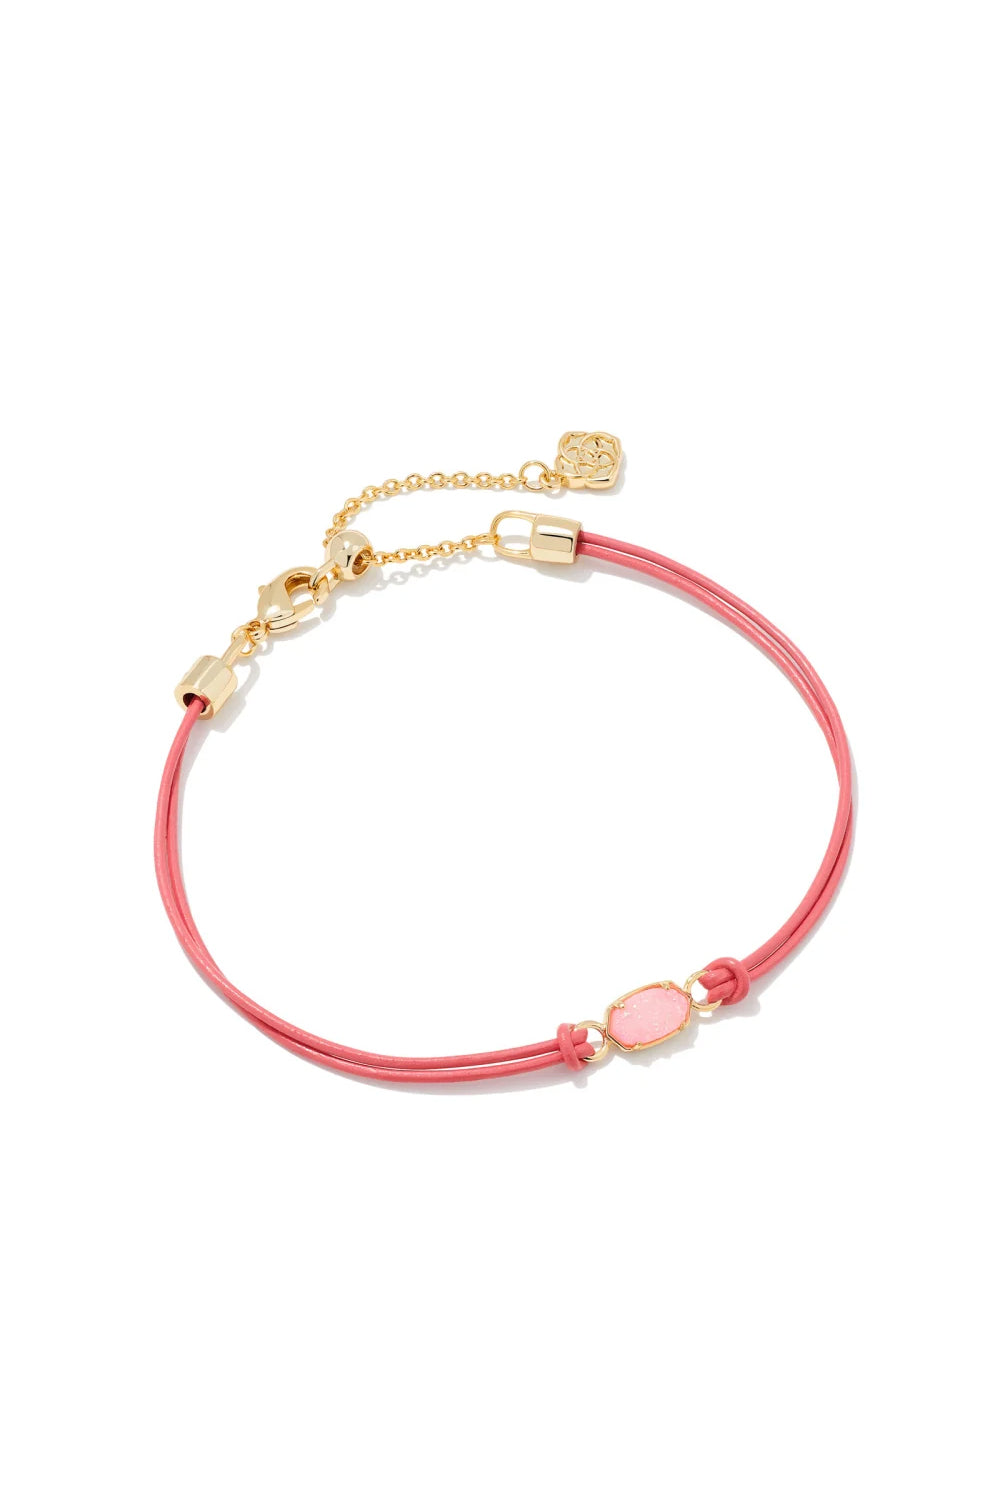 Kendra Scott: Emilie Corded Bracelet - Light Pink Drusy | Makk Fashions